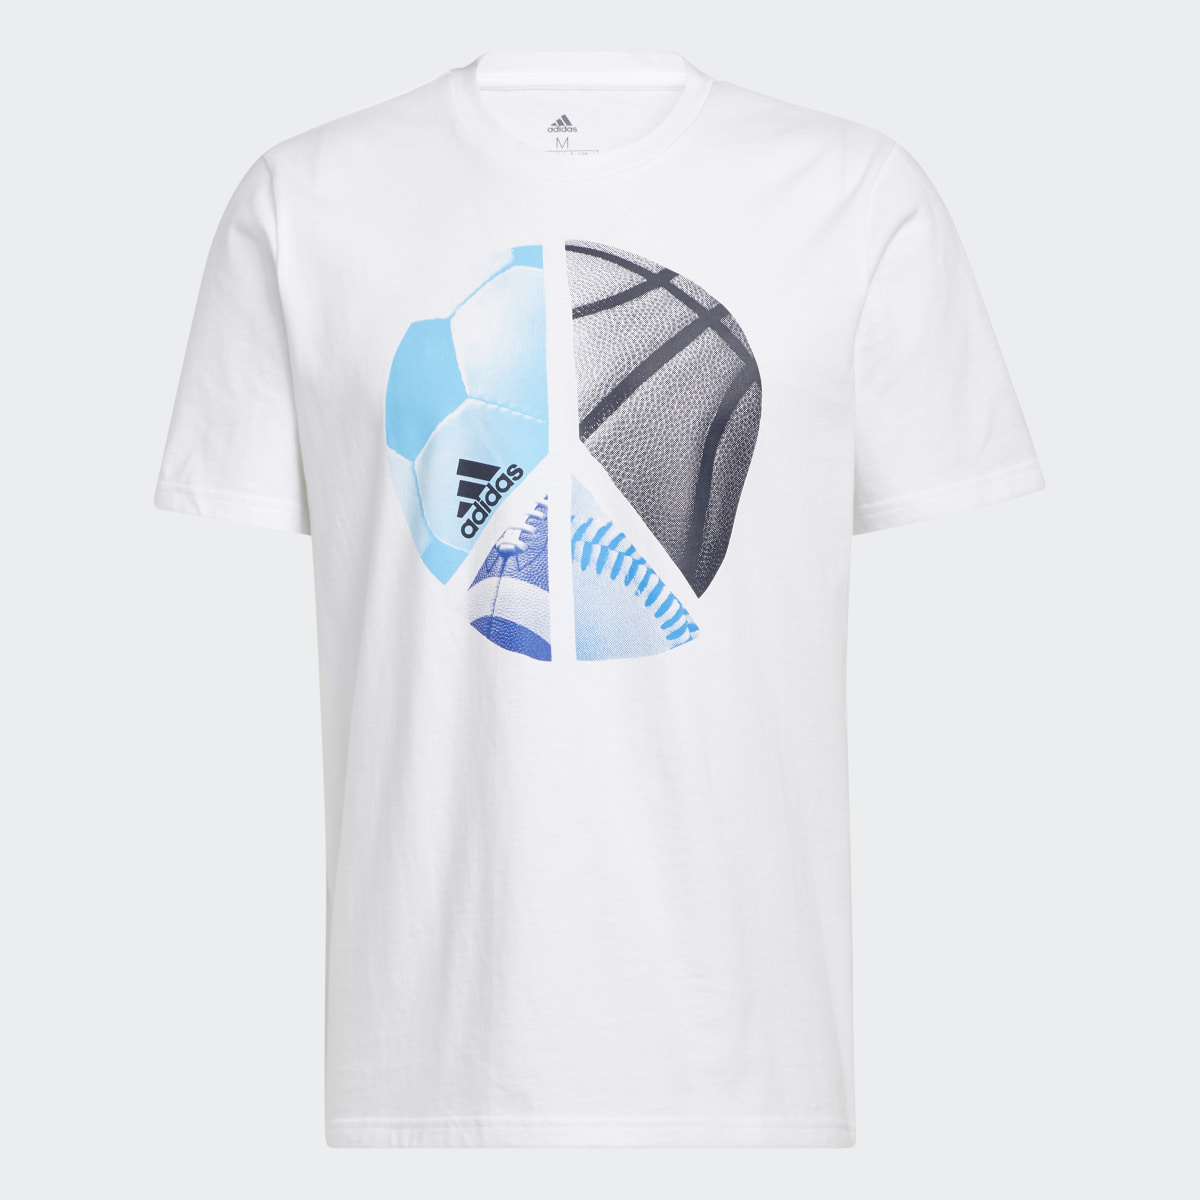 Adidas T-shirt graphique Multiplicity. 5